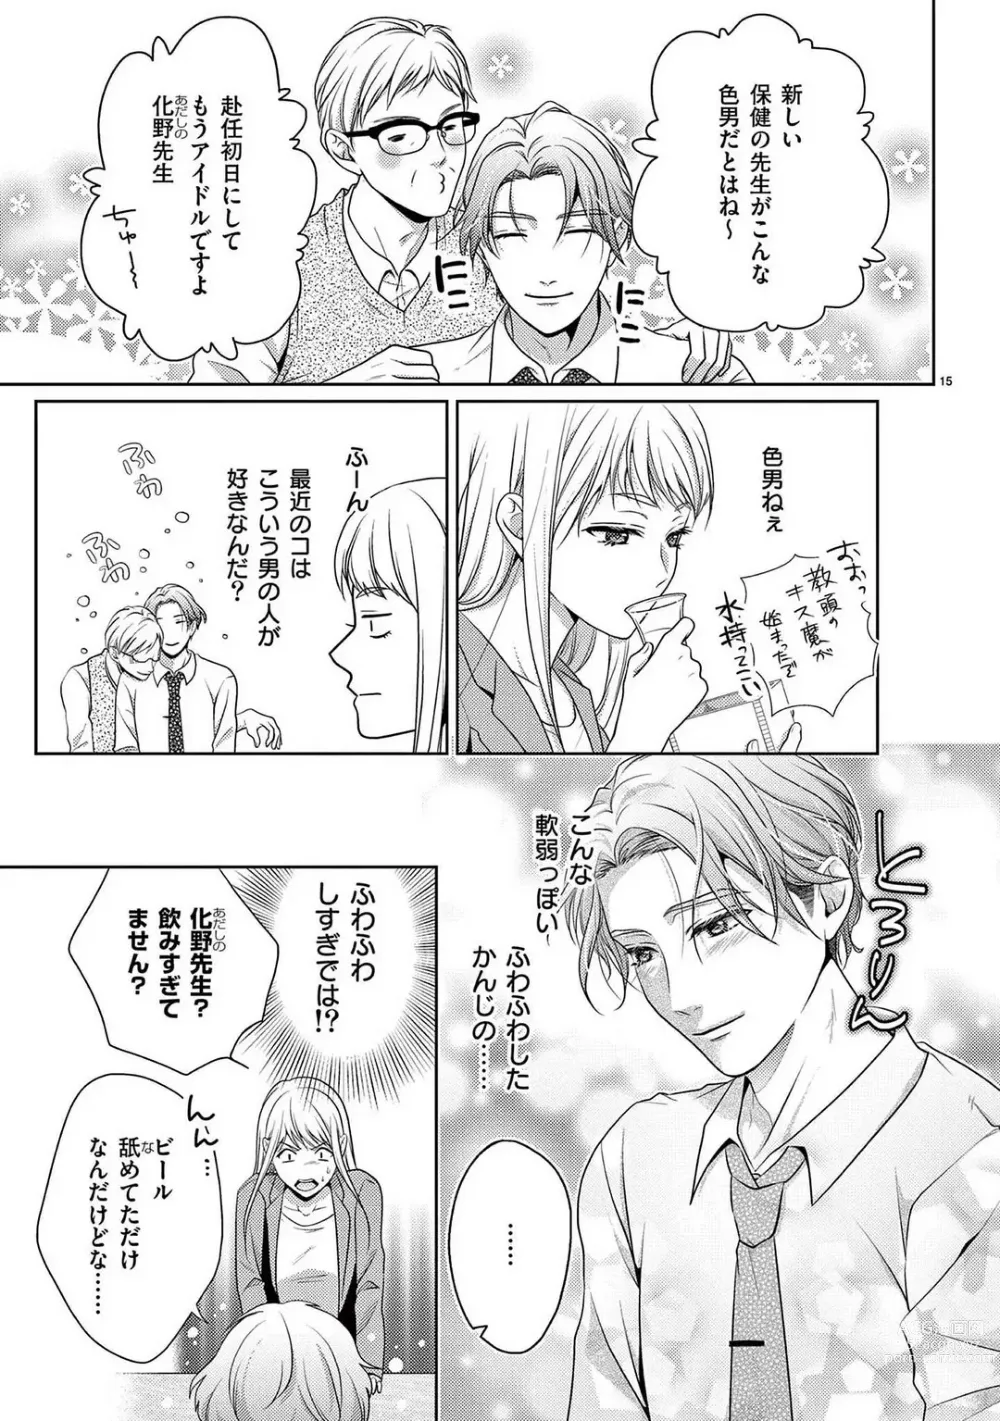 Page 16 of manga Sono Ase, Sekkusu Pafuyūmu. 〜 Sutte, Kisushite, Musabotte~Chp.1-7